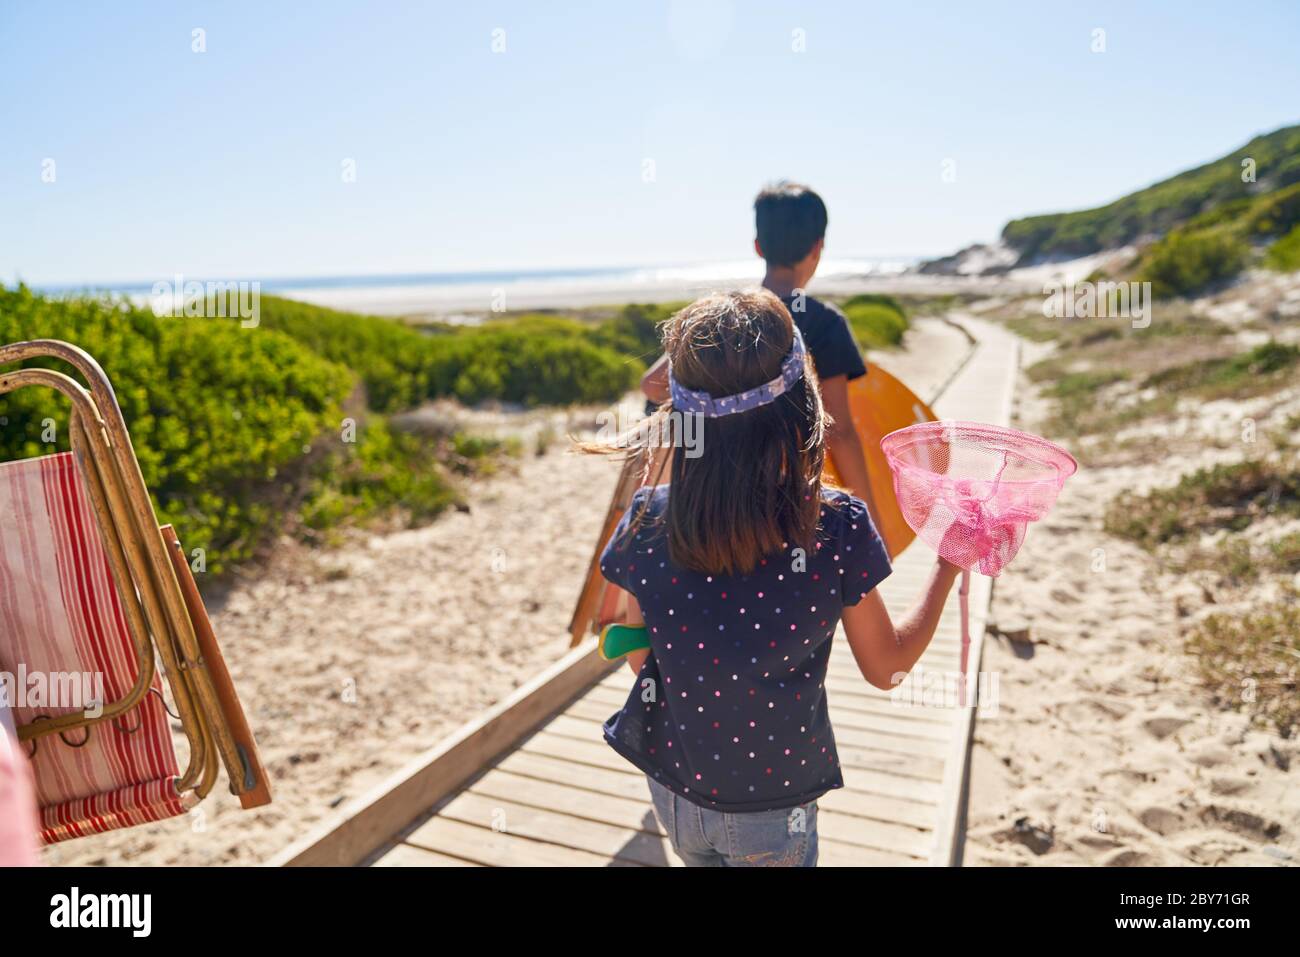 Girl carrying butterfly net on sunny beach boardwalk Stock Photo